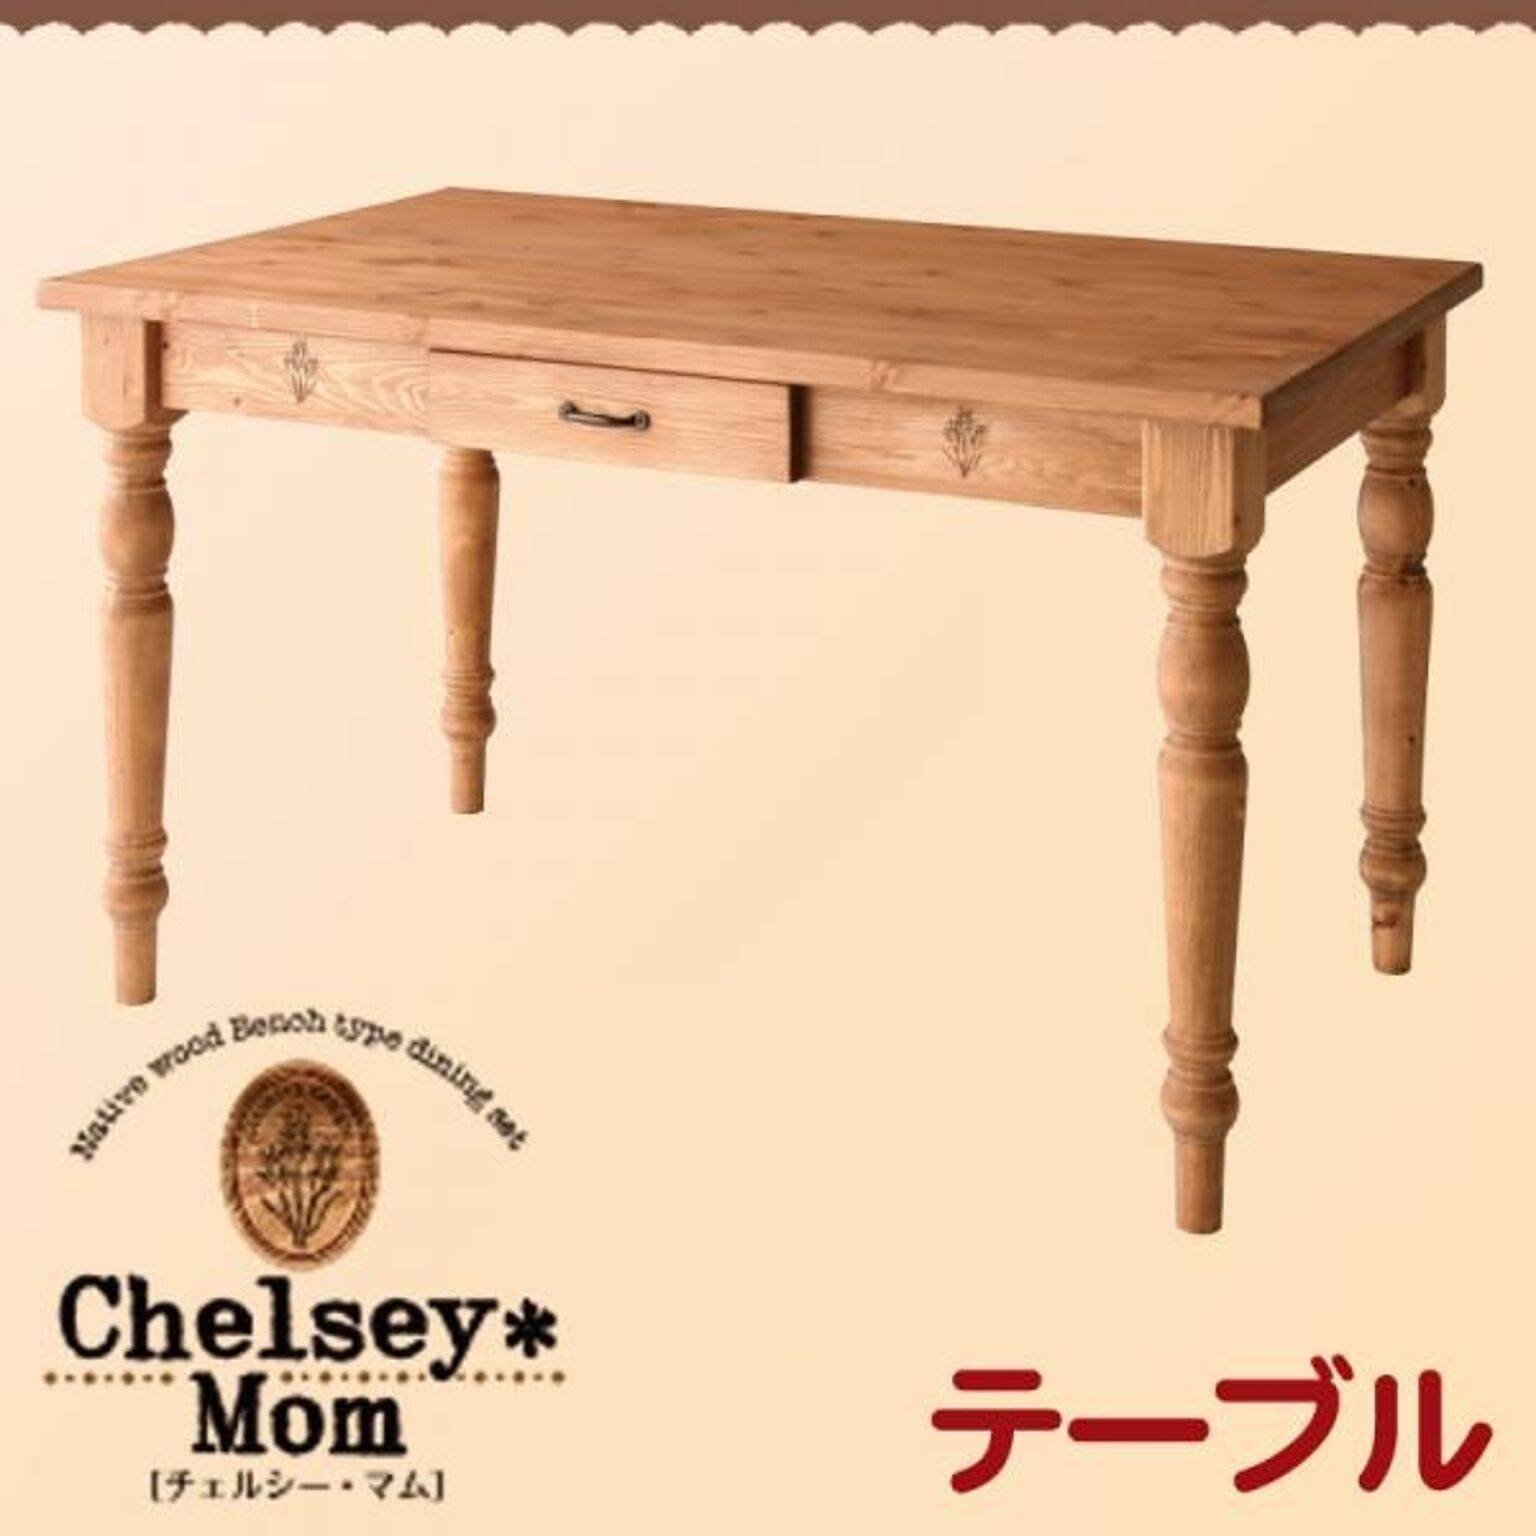 Chelsey*Mom 天然木カントリーデザイン家具 テーブル